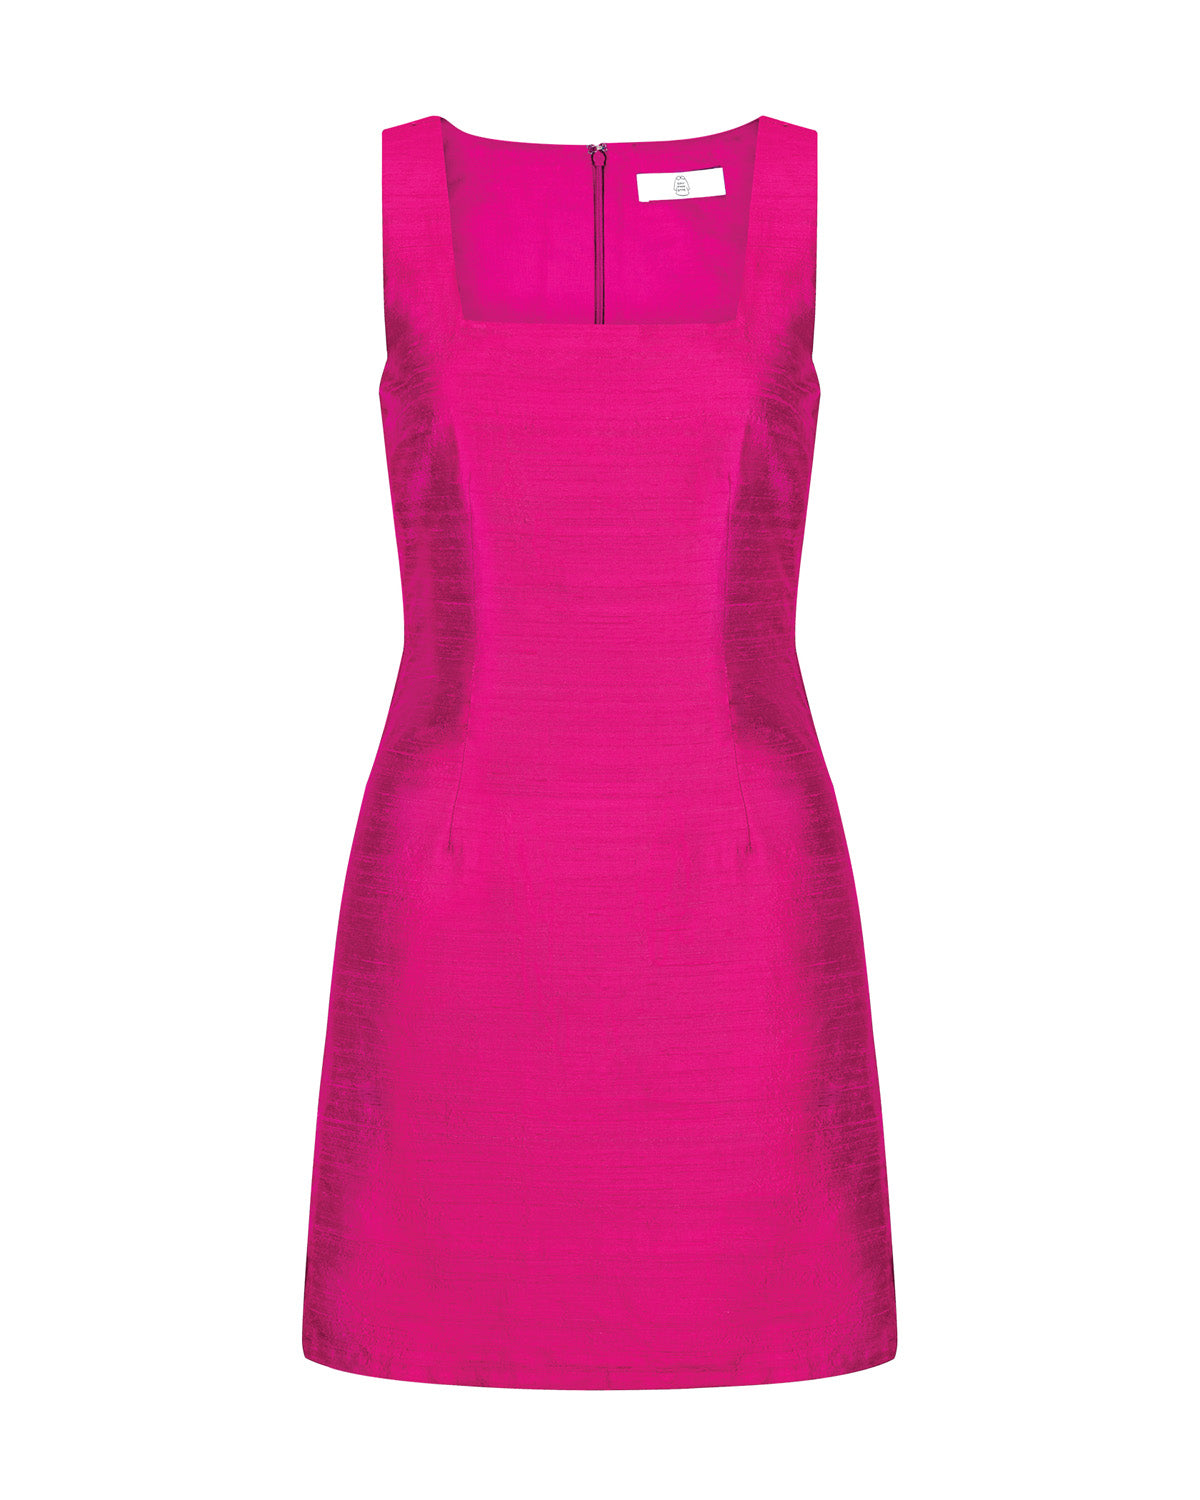 the perfectly cut mini dress in vibrant pink silk dupioni. 100% silk. Square neckline and invisible back zipper.